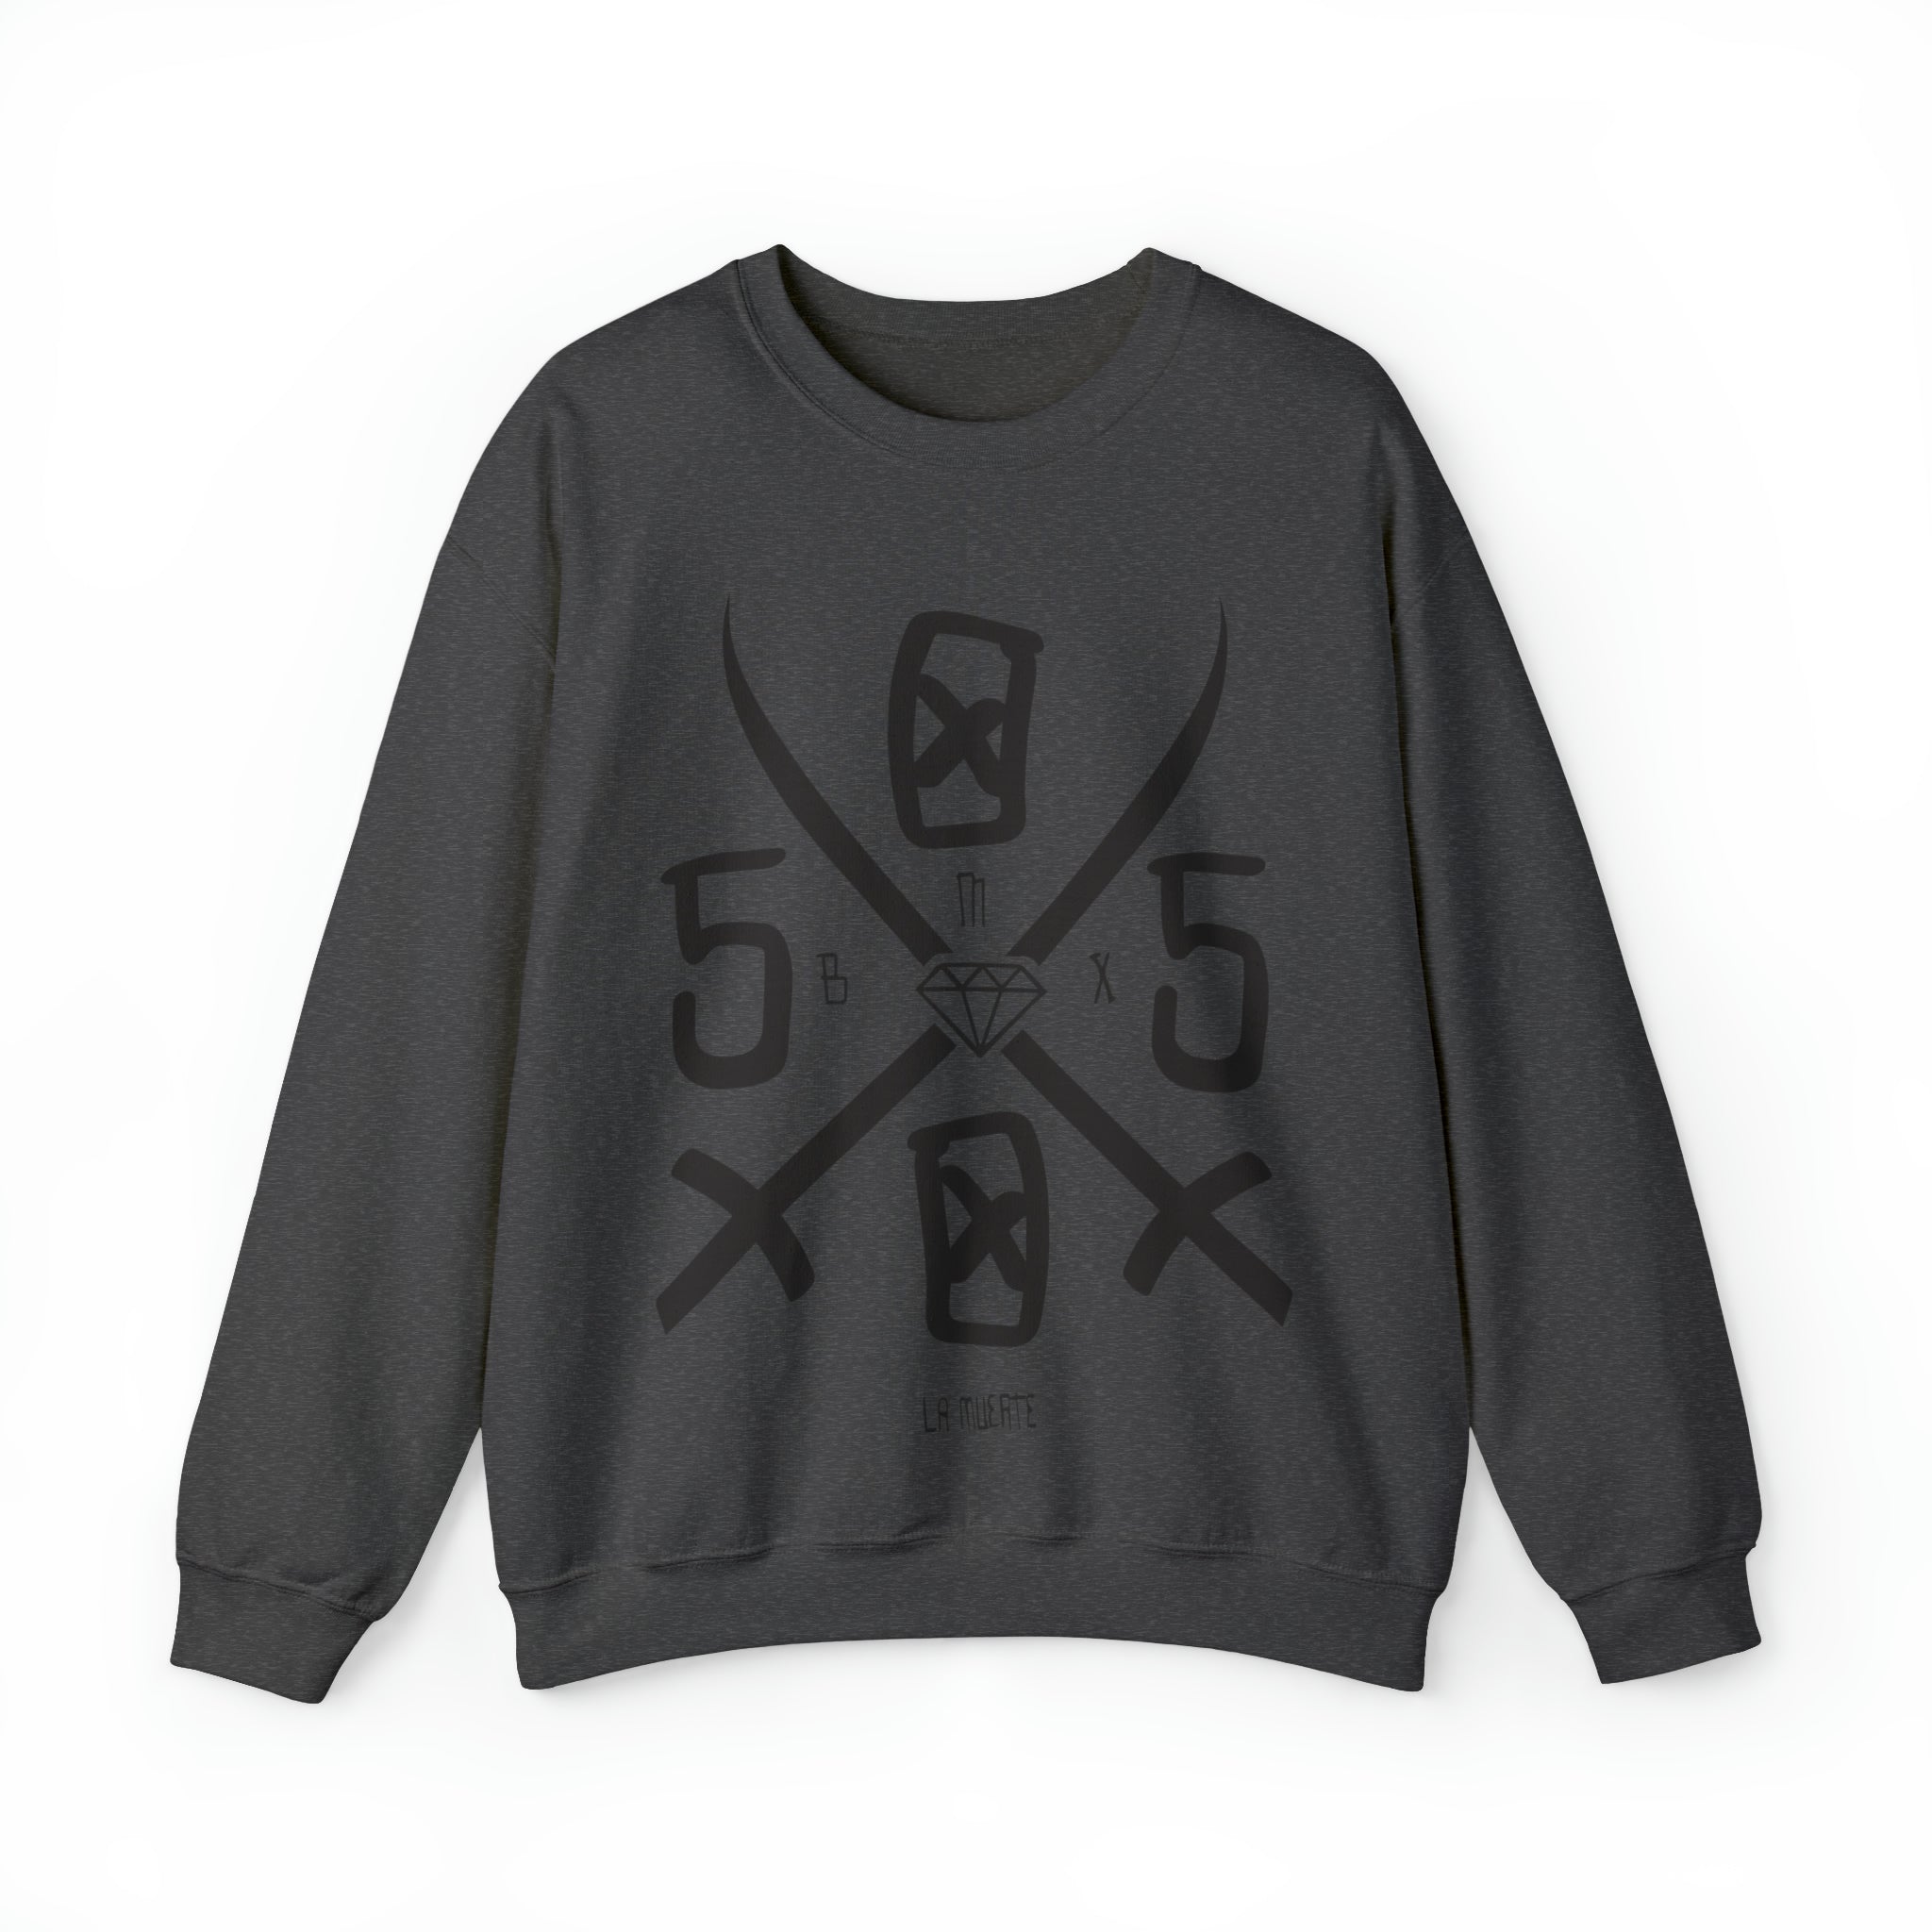 5050bmx La Muerte Swords Crewneck Sweatshirt (Black)